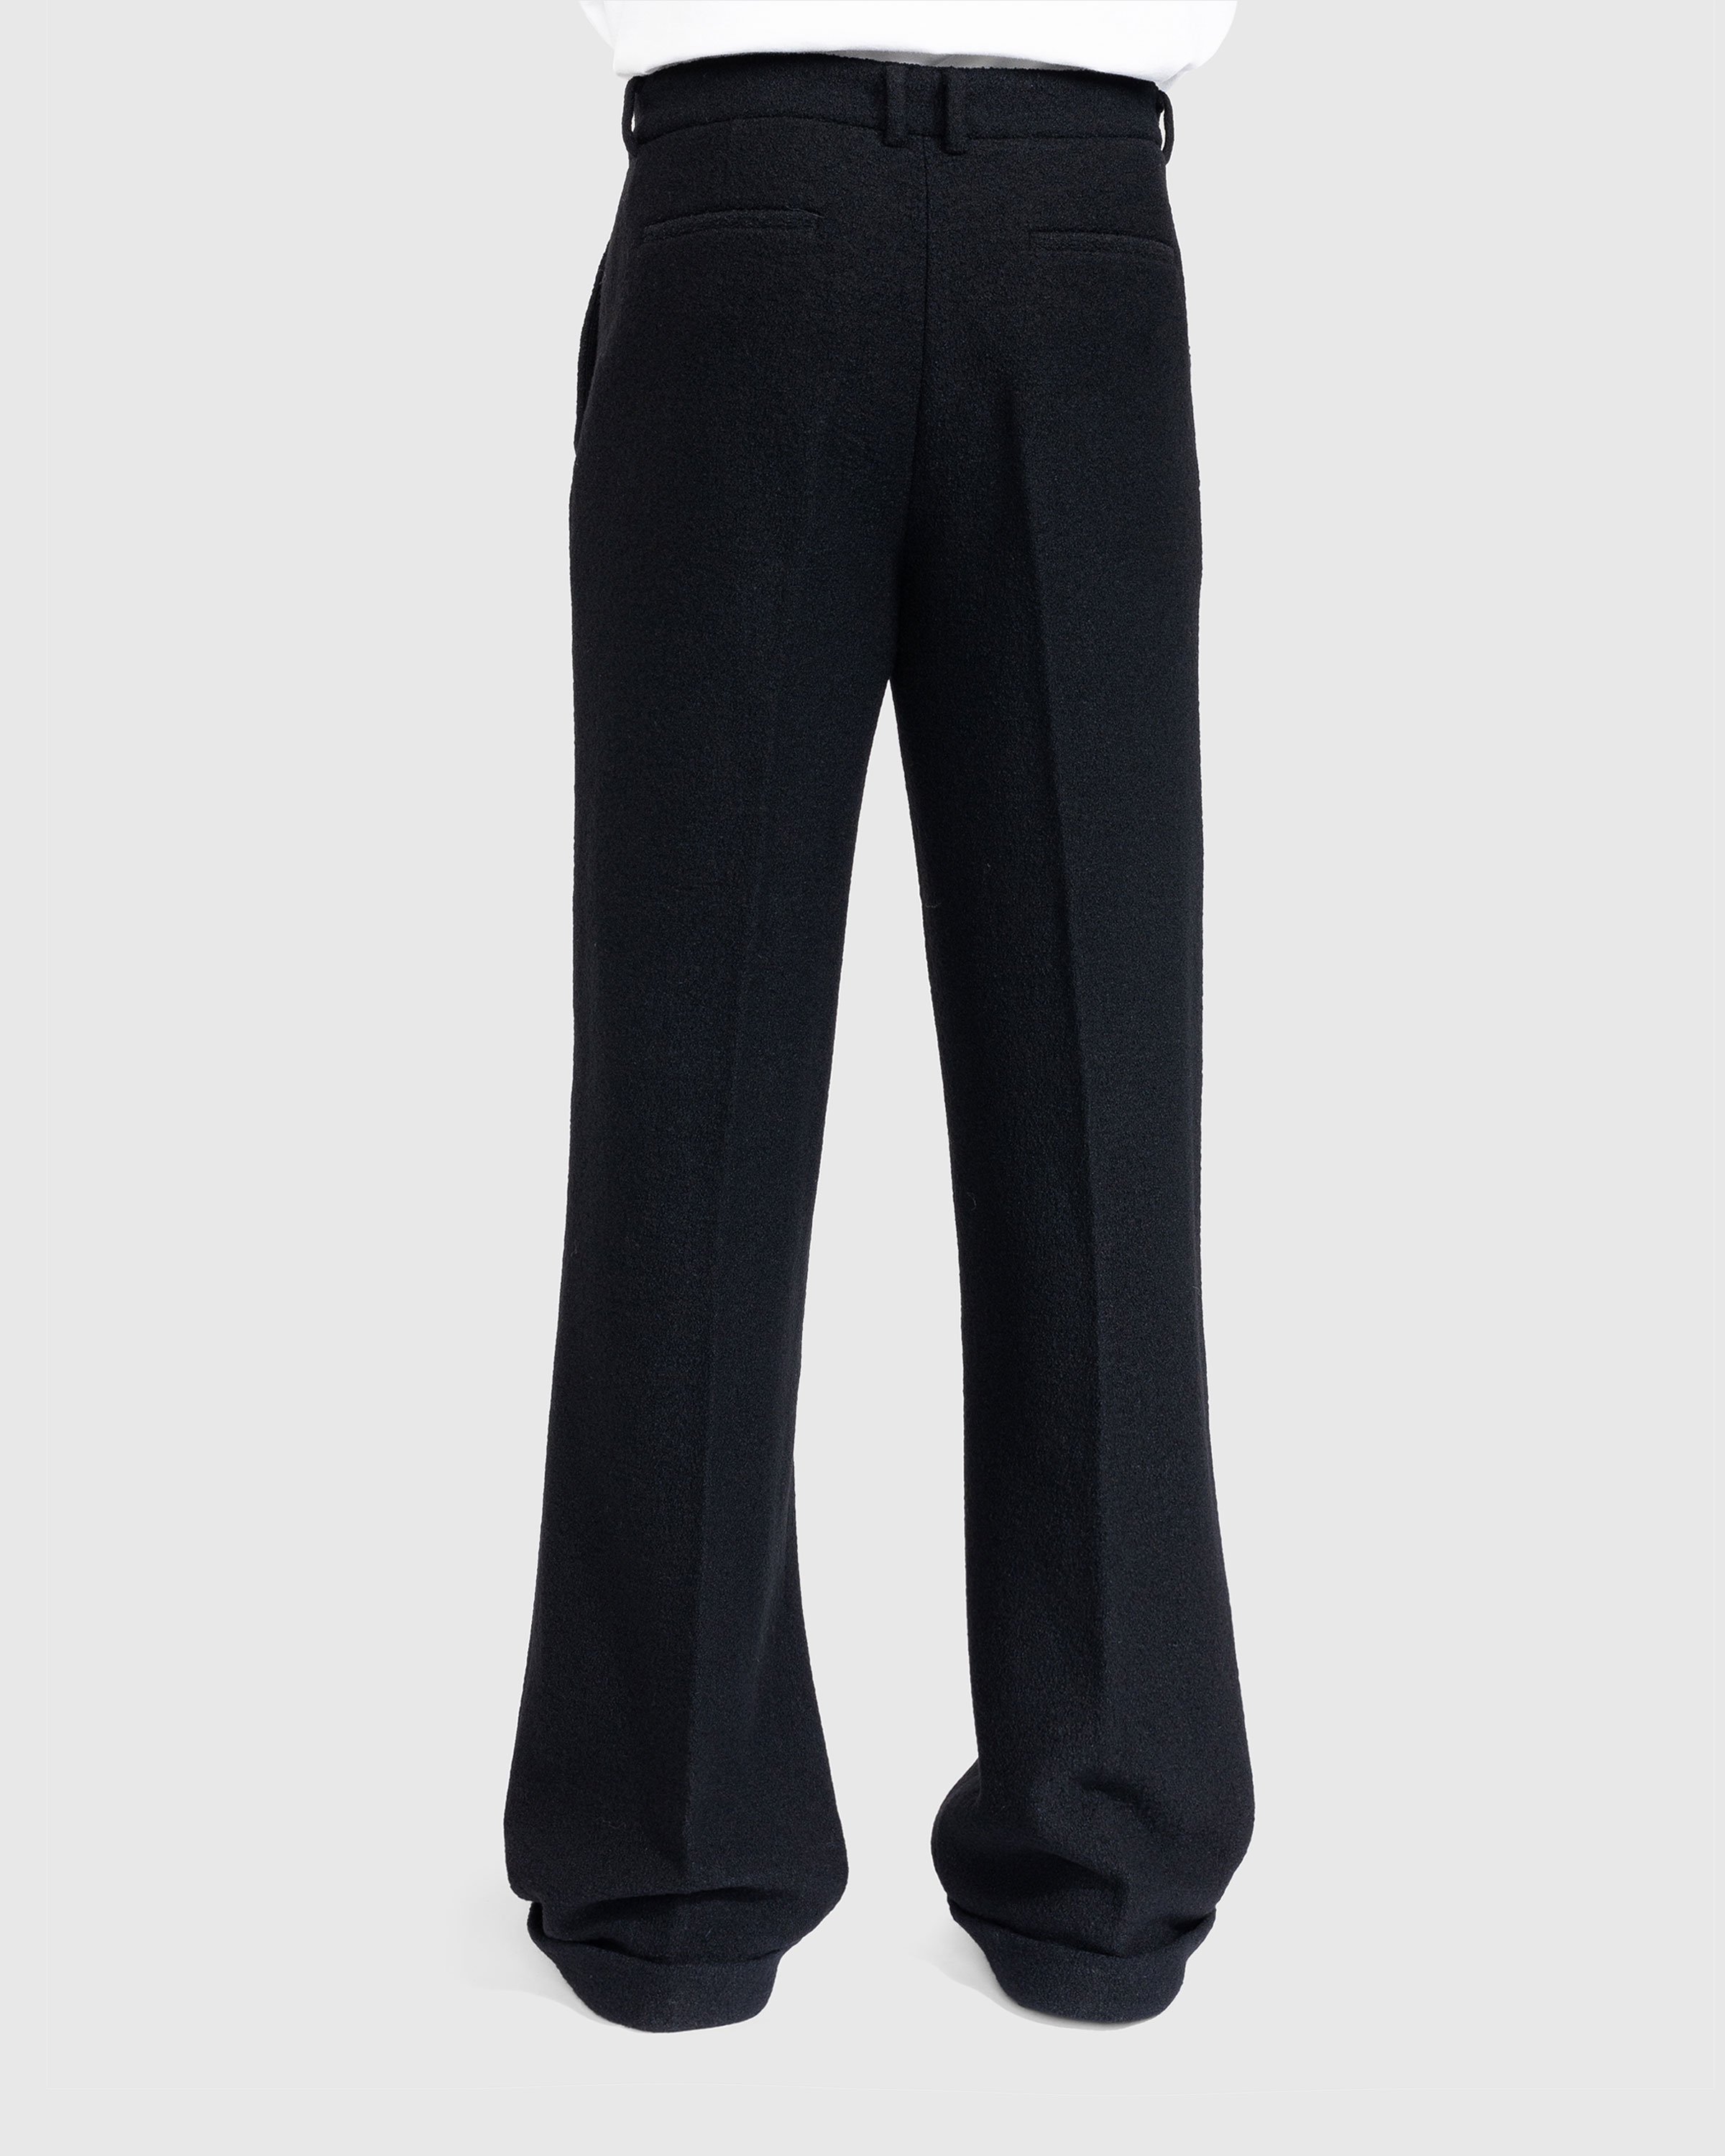 Trussardi - Boucle Jersey Trousers Black - Clothing - Black - Image 4